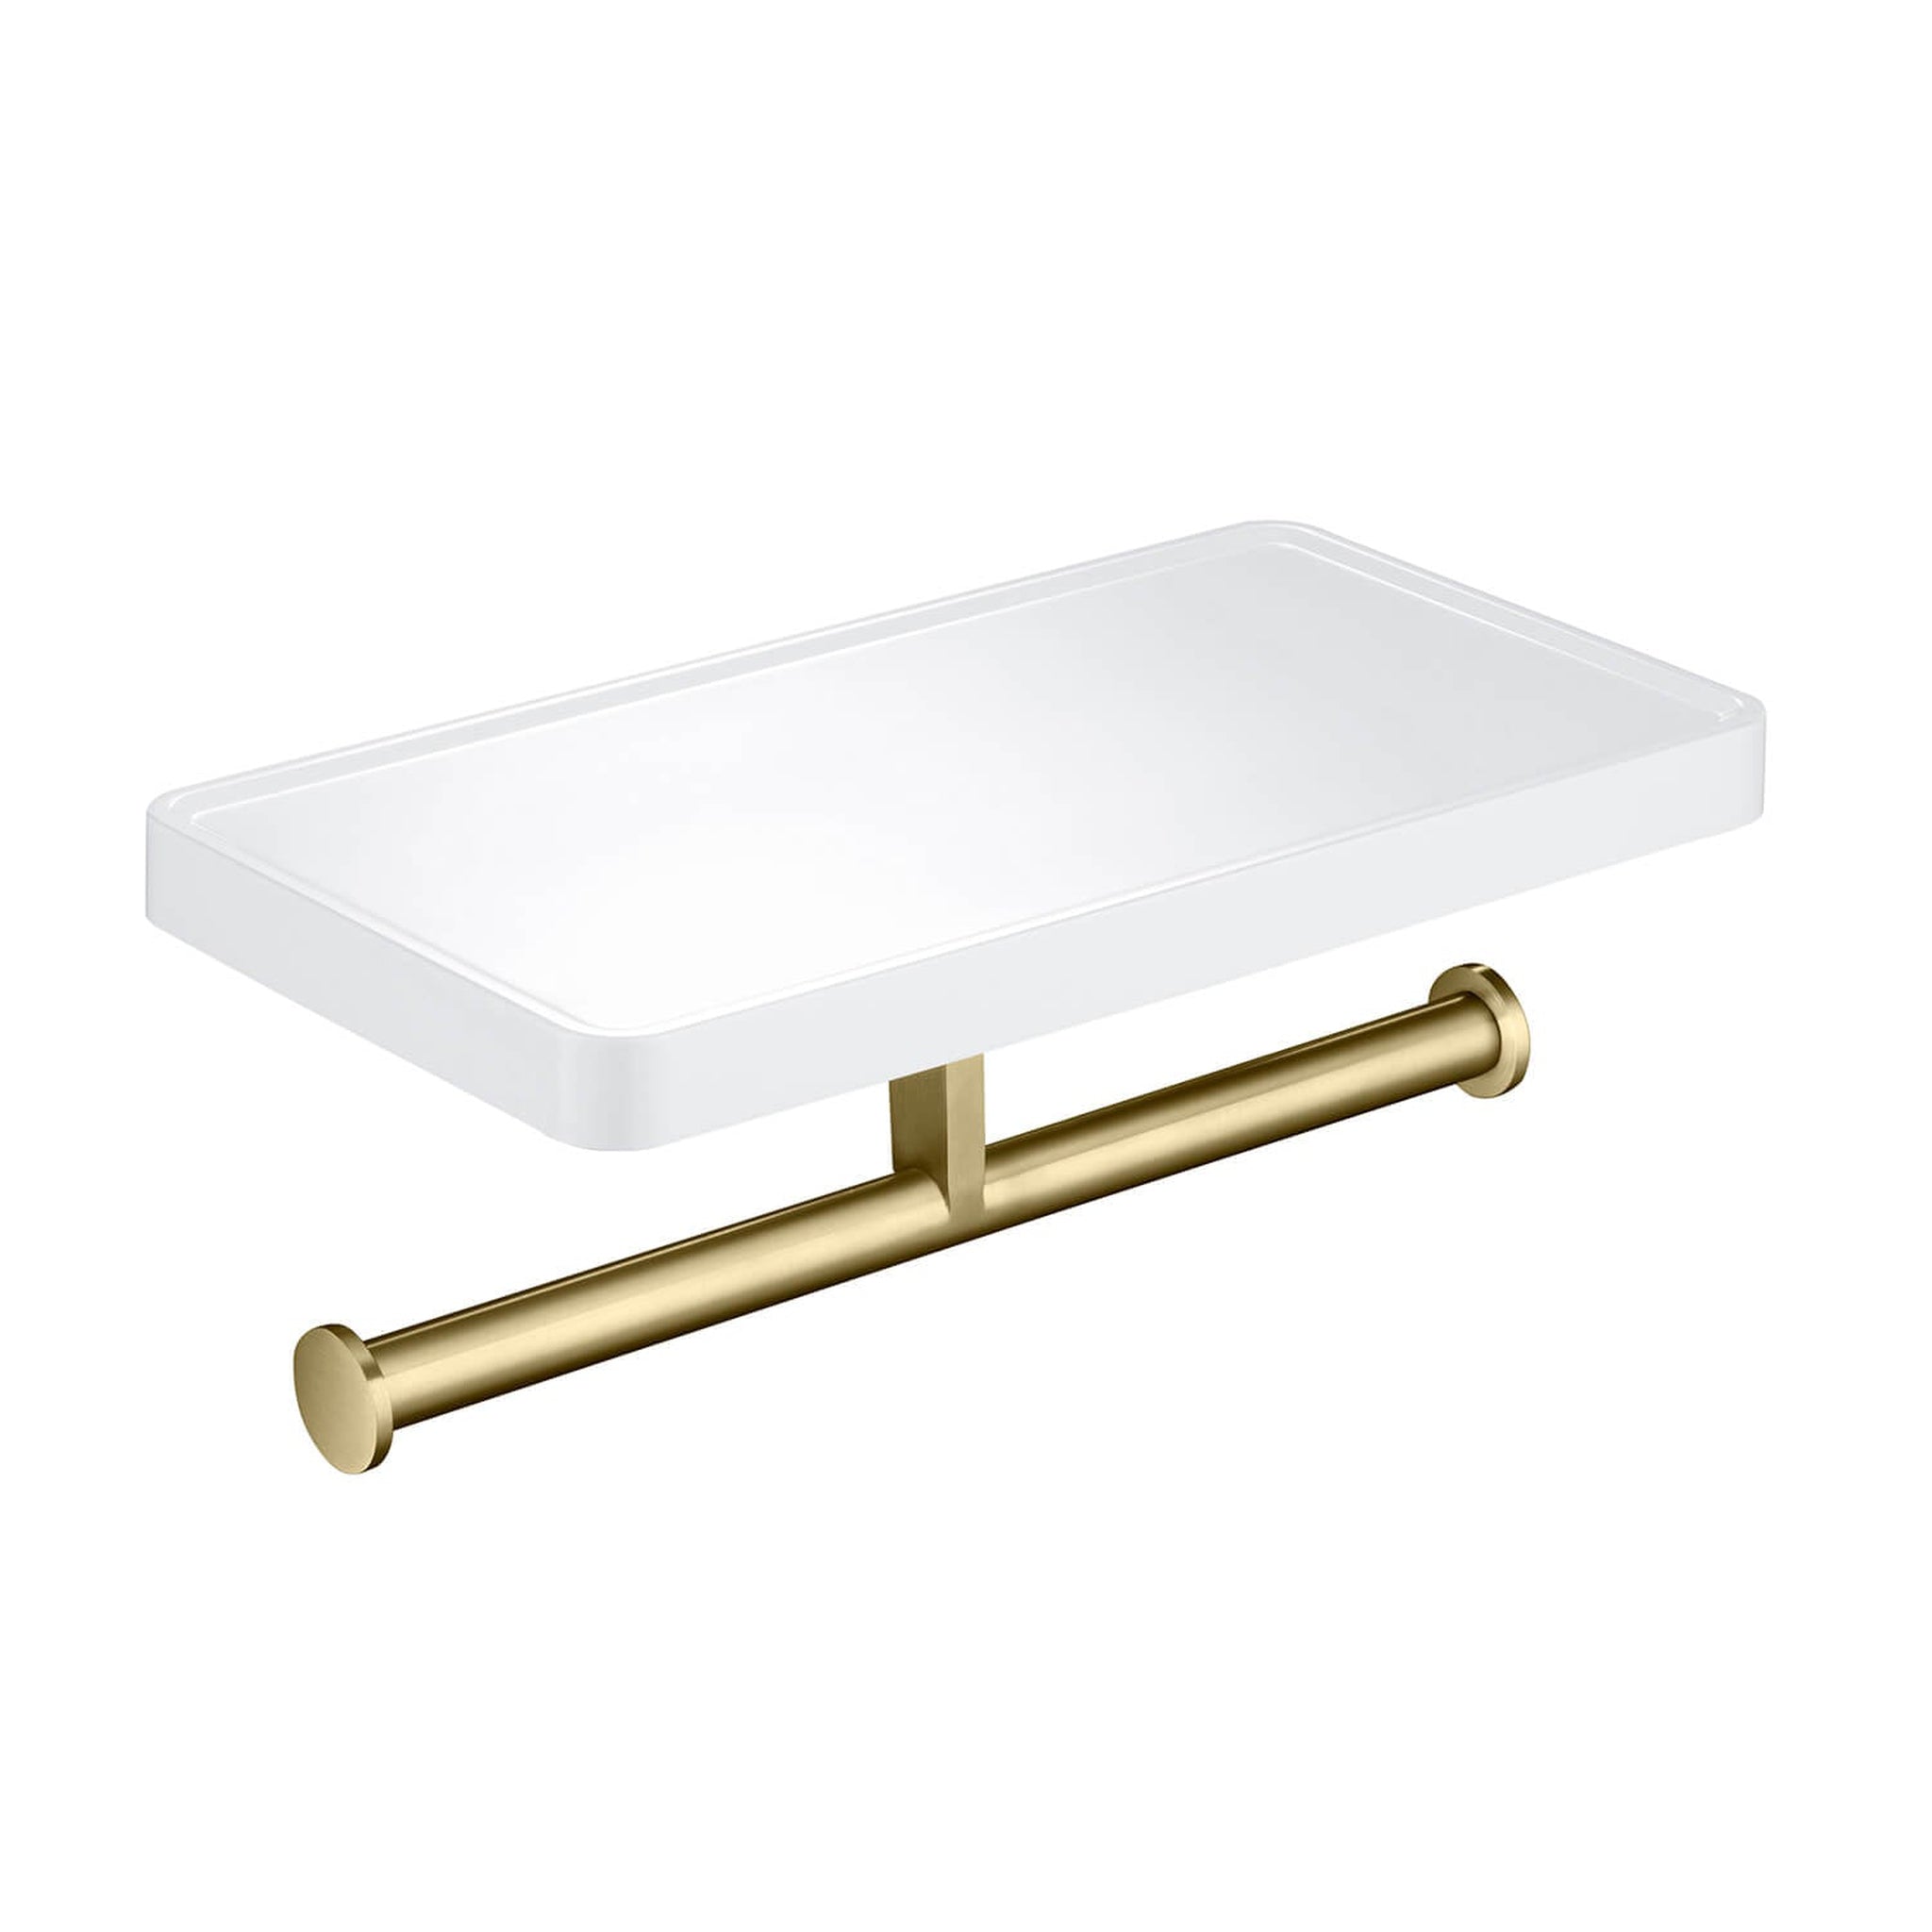 KIBI, KIBI Deco Bathroom Double Tissue Holder With Shelf in Brushed Gold Finish